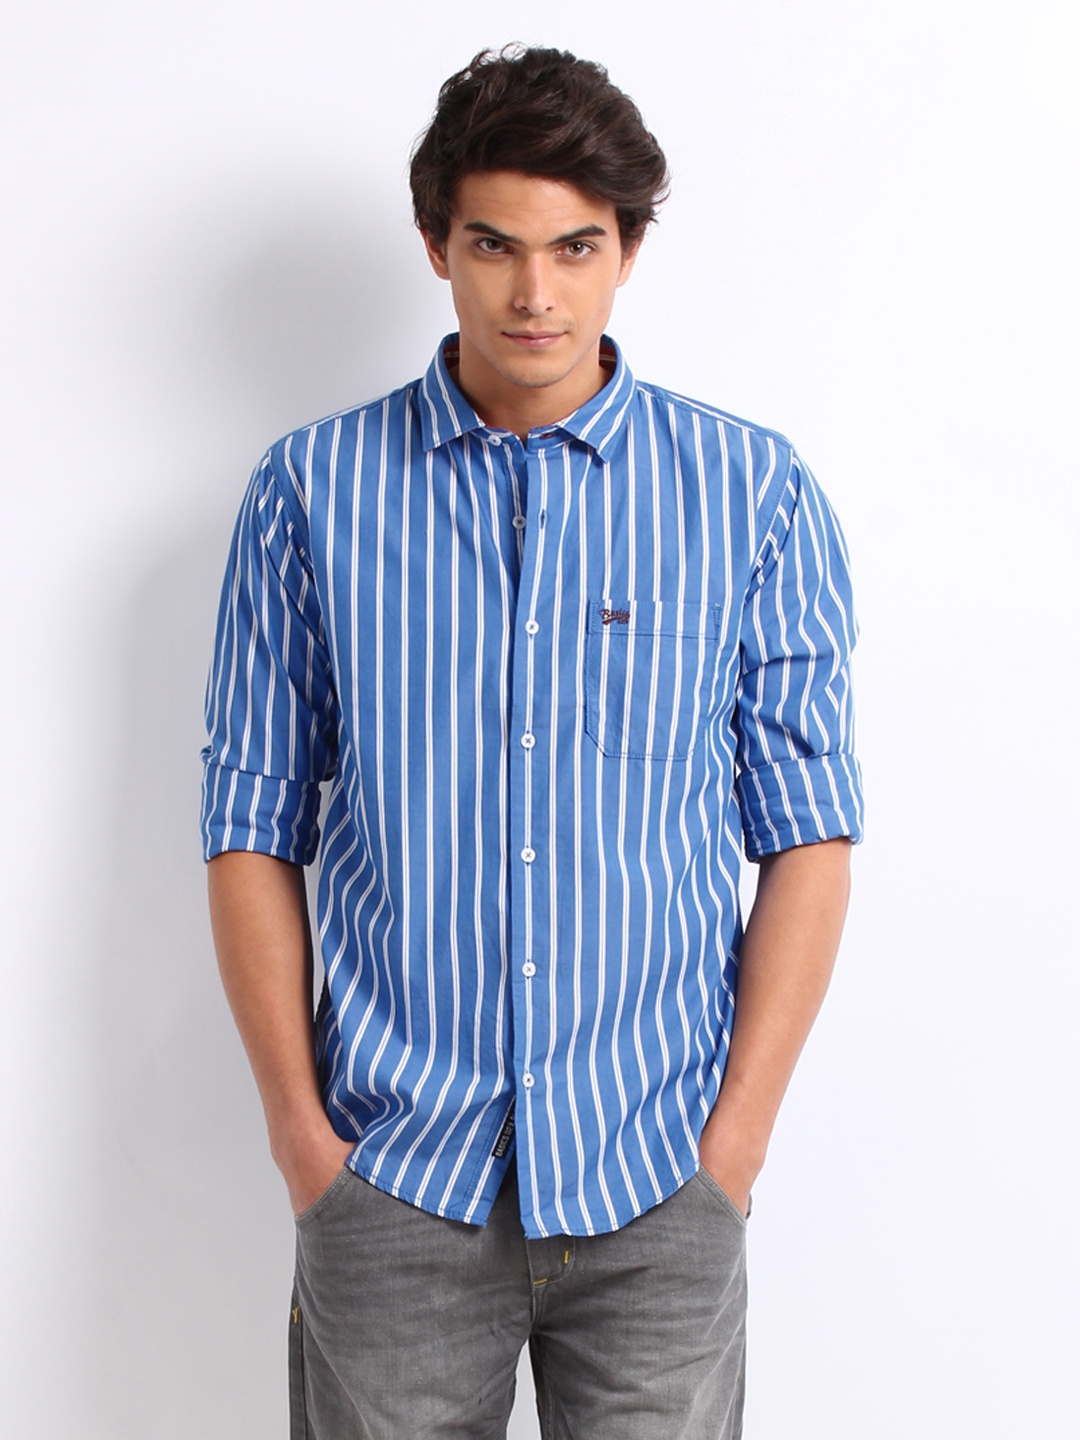 Buy Basics Men Blue & White Striped Slim Fit Casual Shirt - Shirts for Men  170596